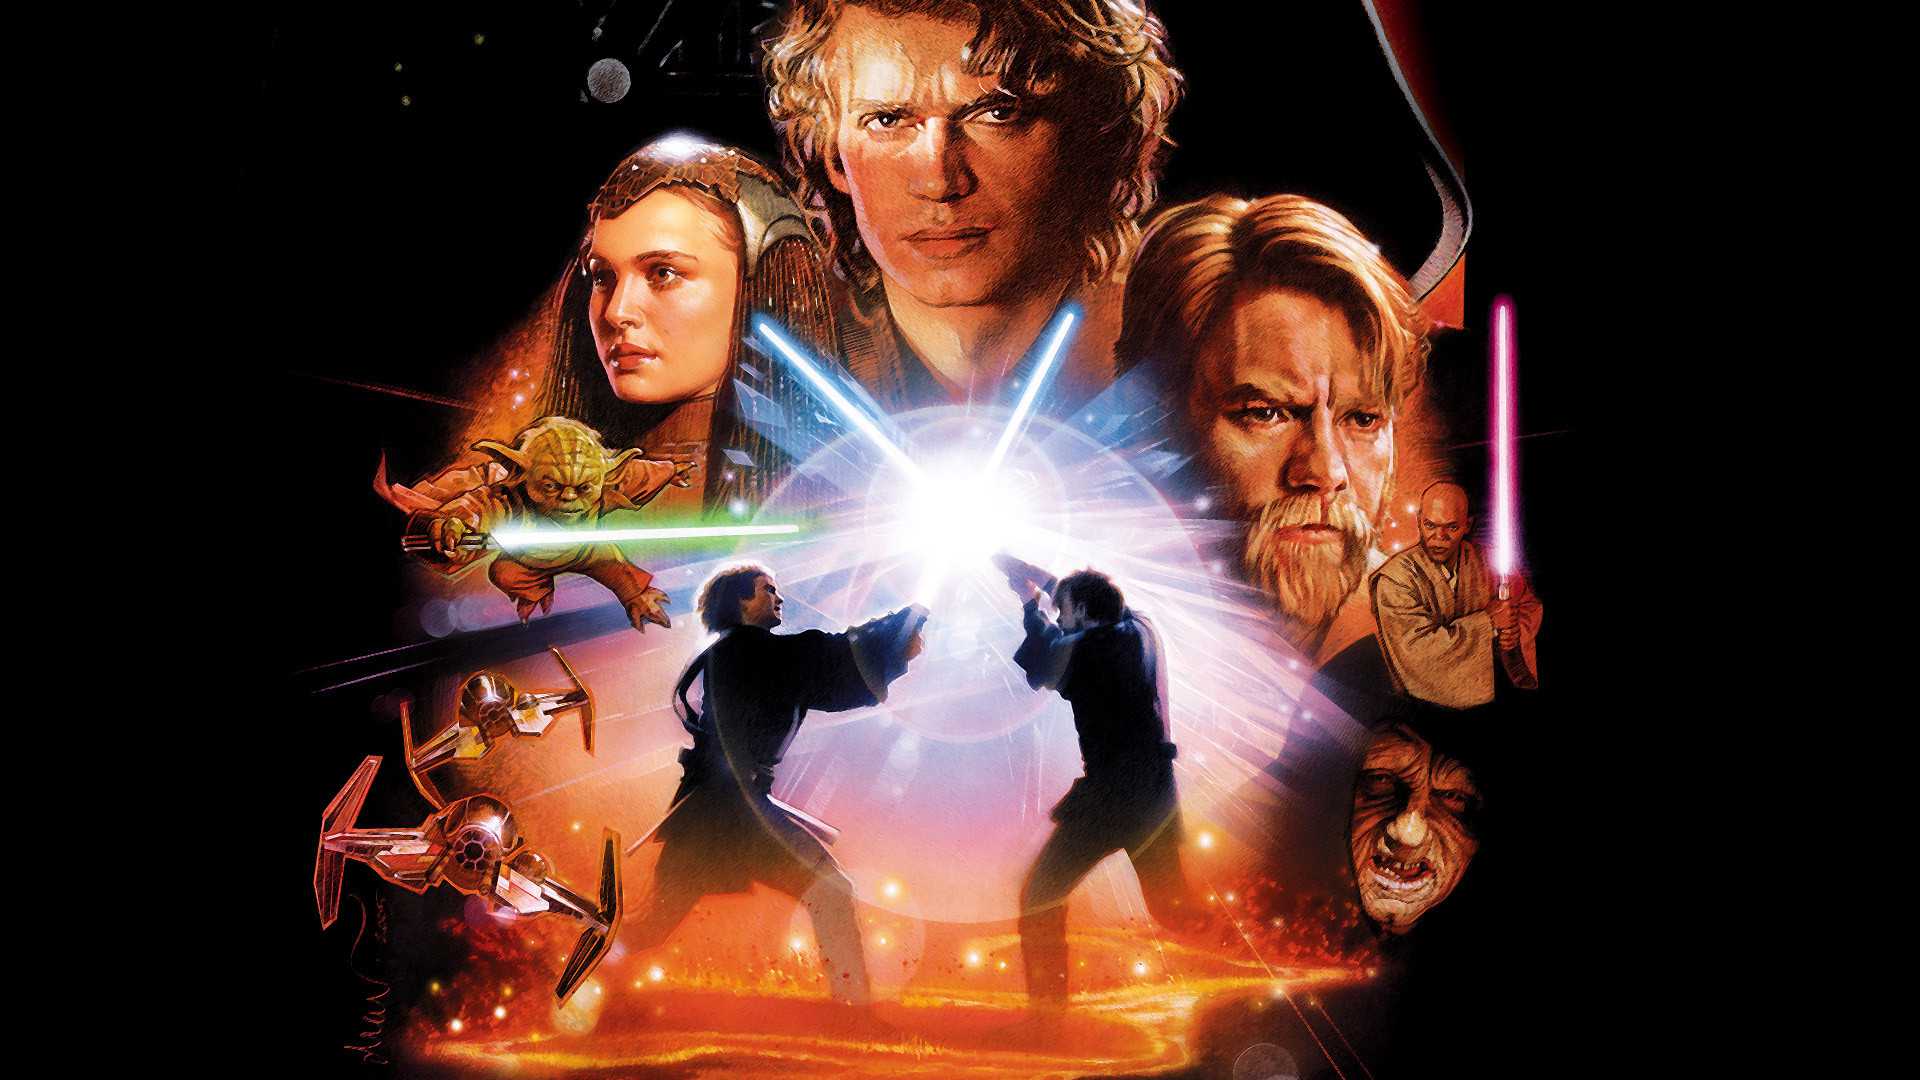 Star Wars Episode III: Revenge Of The Sith Wallpaper. Star